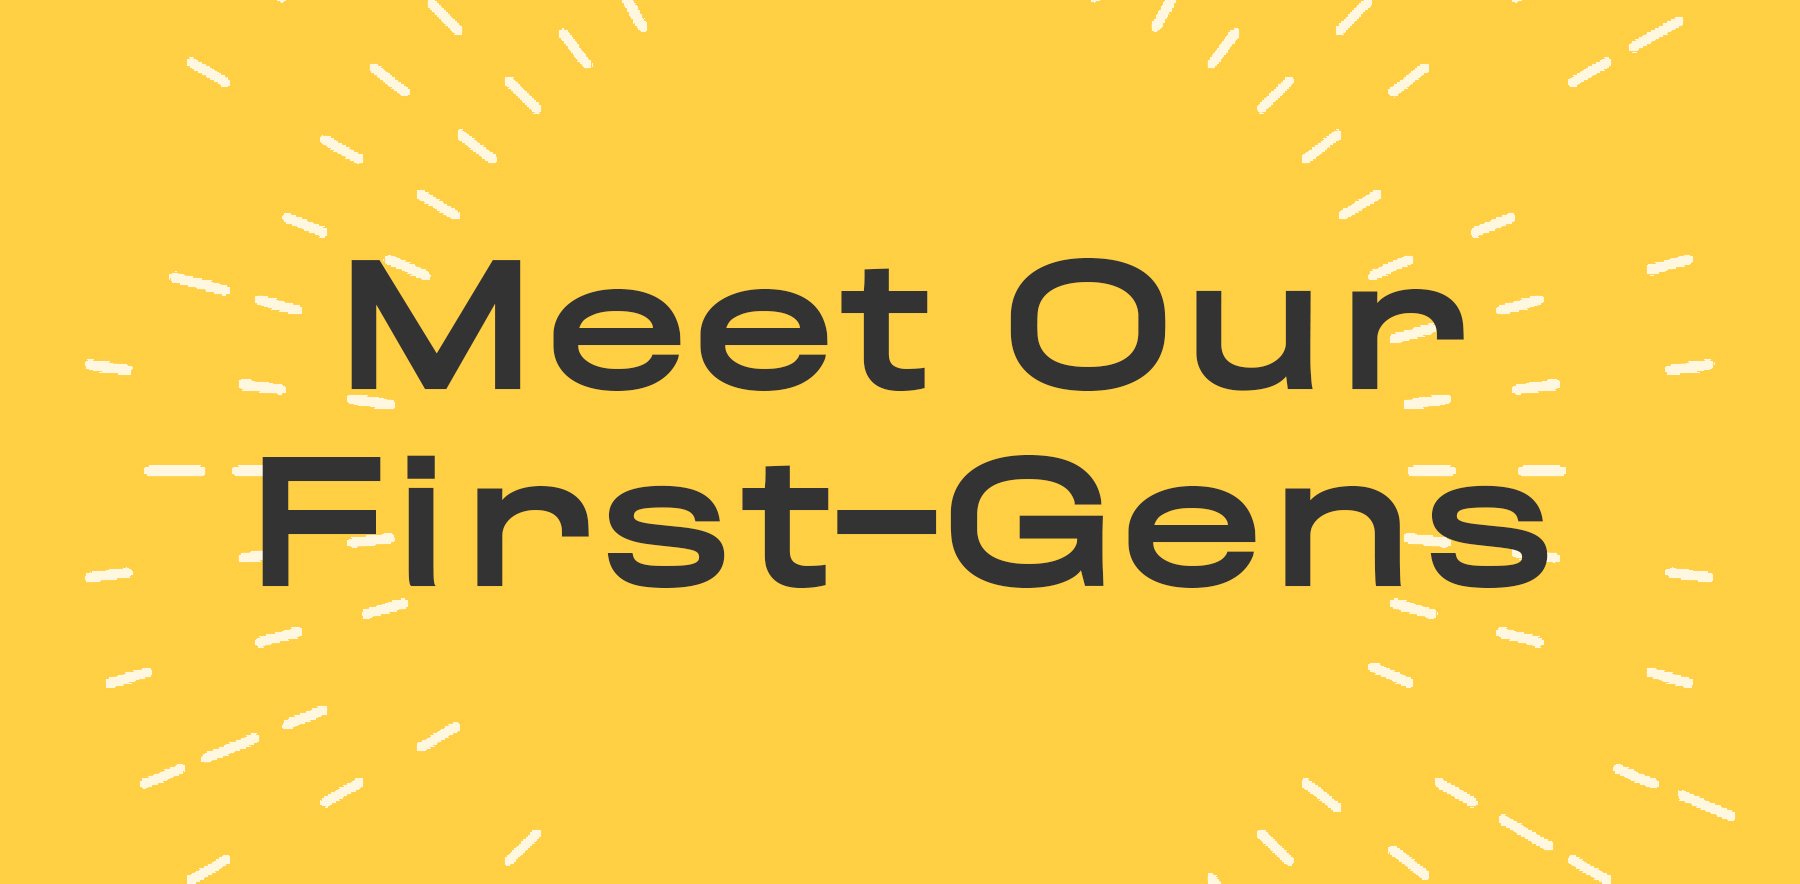 Meet our First-Gens